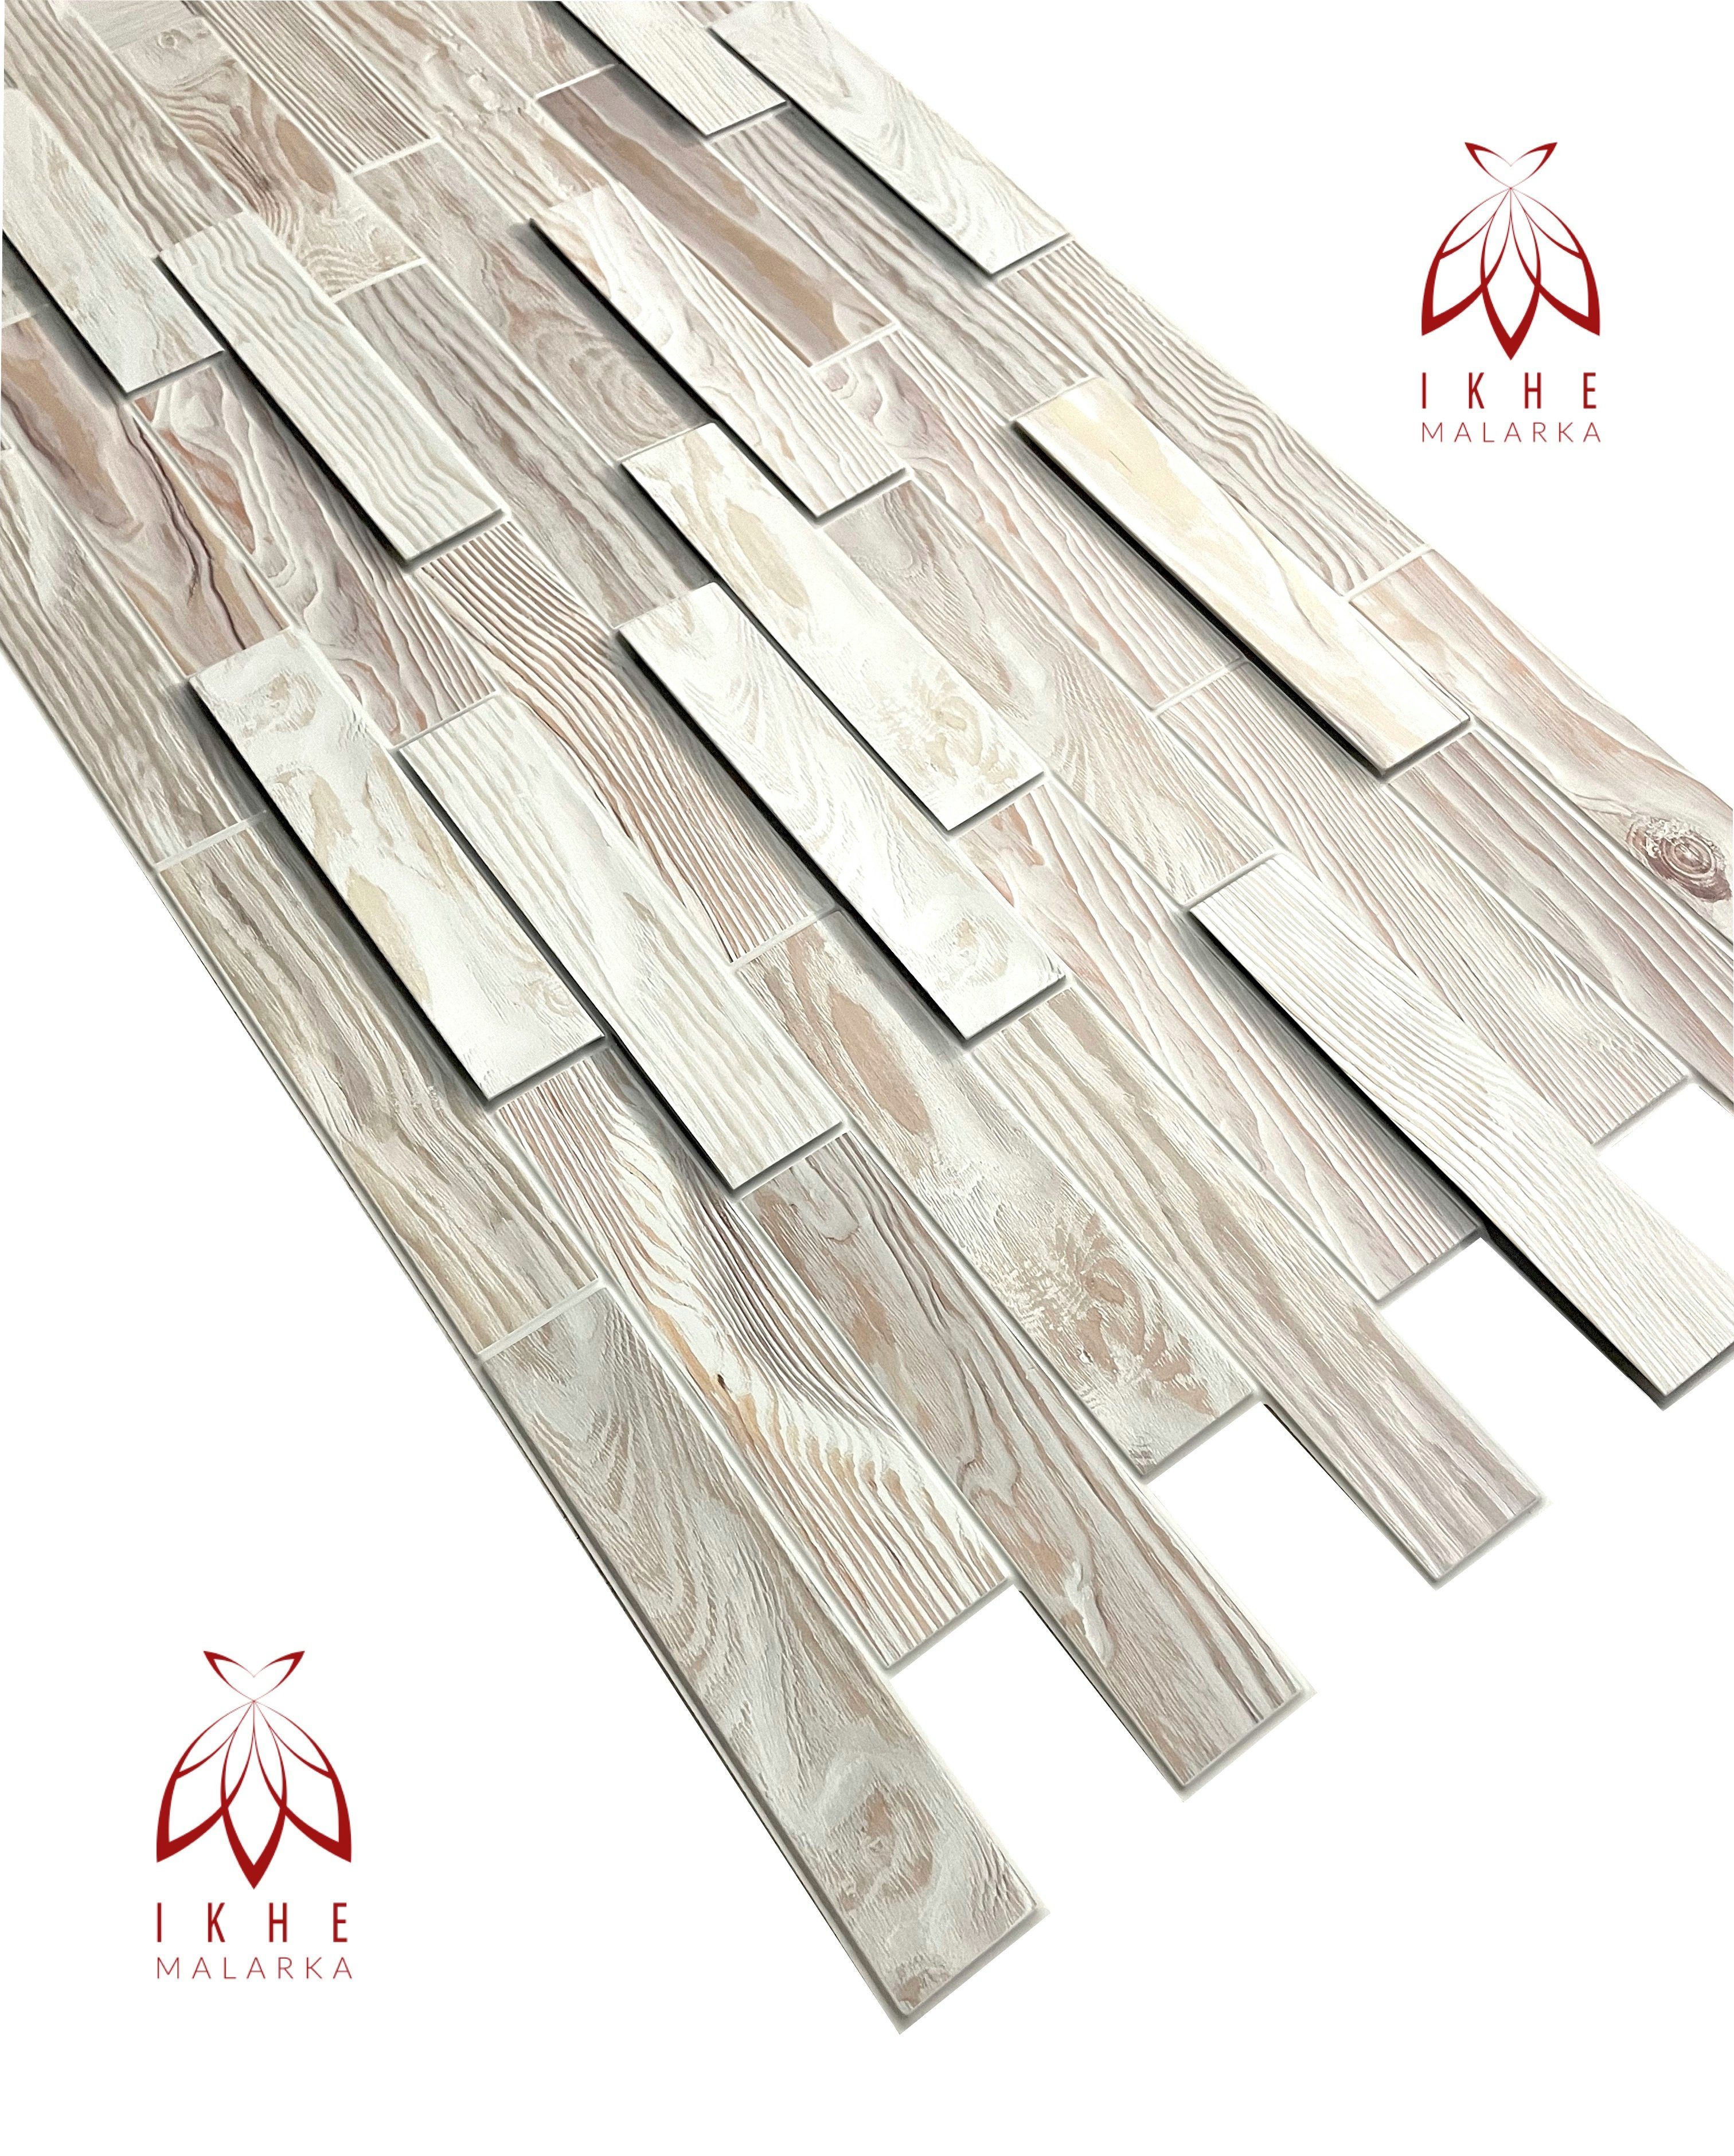 OF 4qm/10 PVC Bleched Stück 0,40 3D FLIESEN, Imitation qm, Wandpaneele WOOD 3D OAK Holz Wandpaneel IMITATION IKHEMalarka PVC-Verkleidung